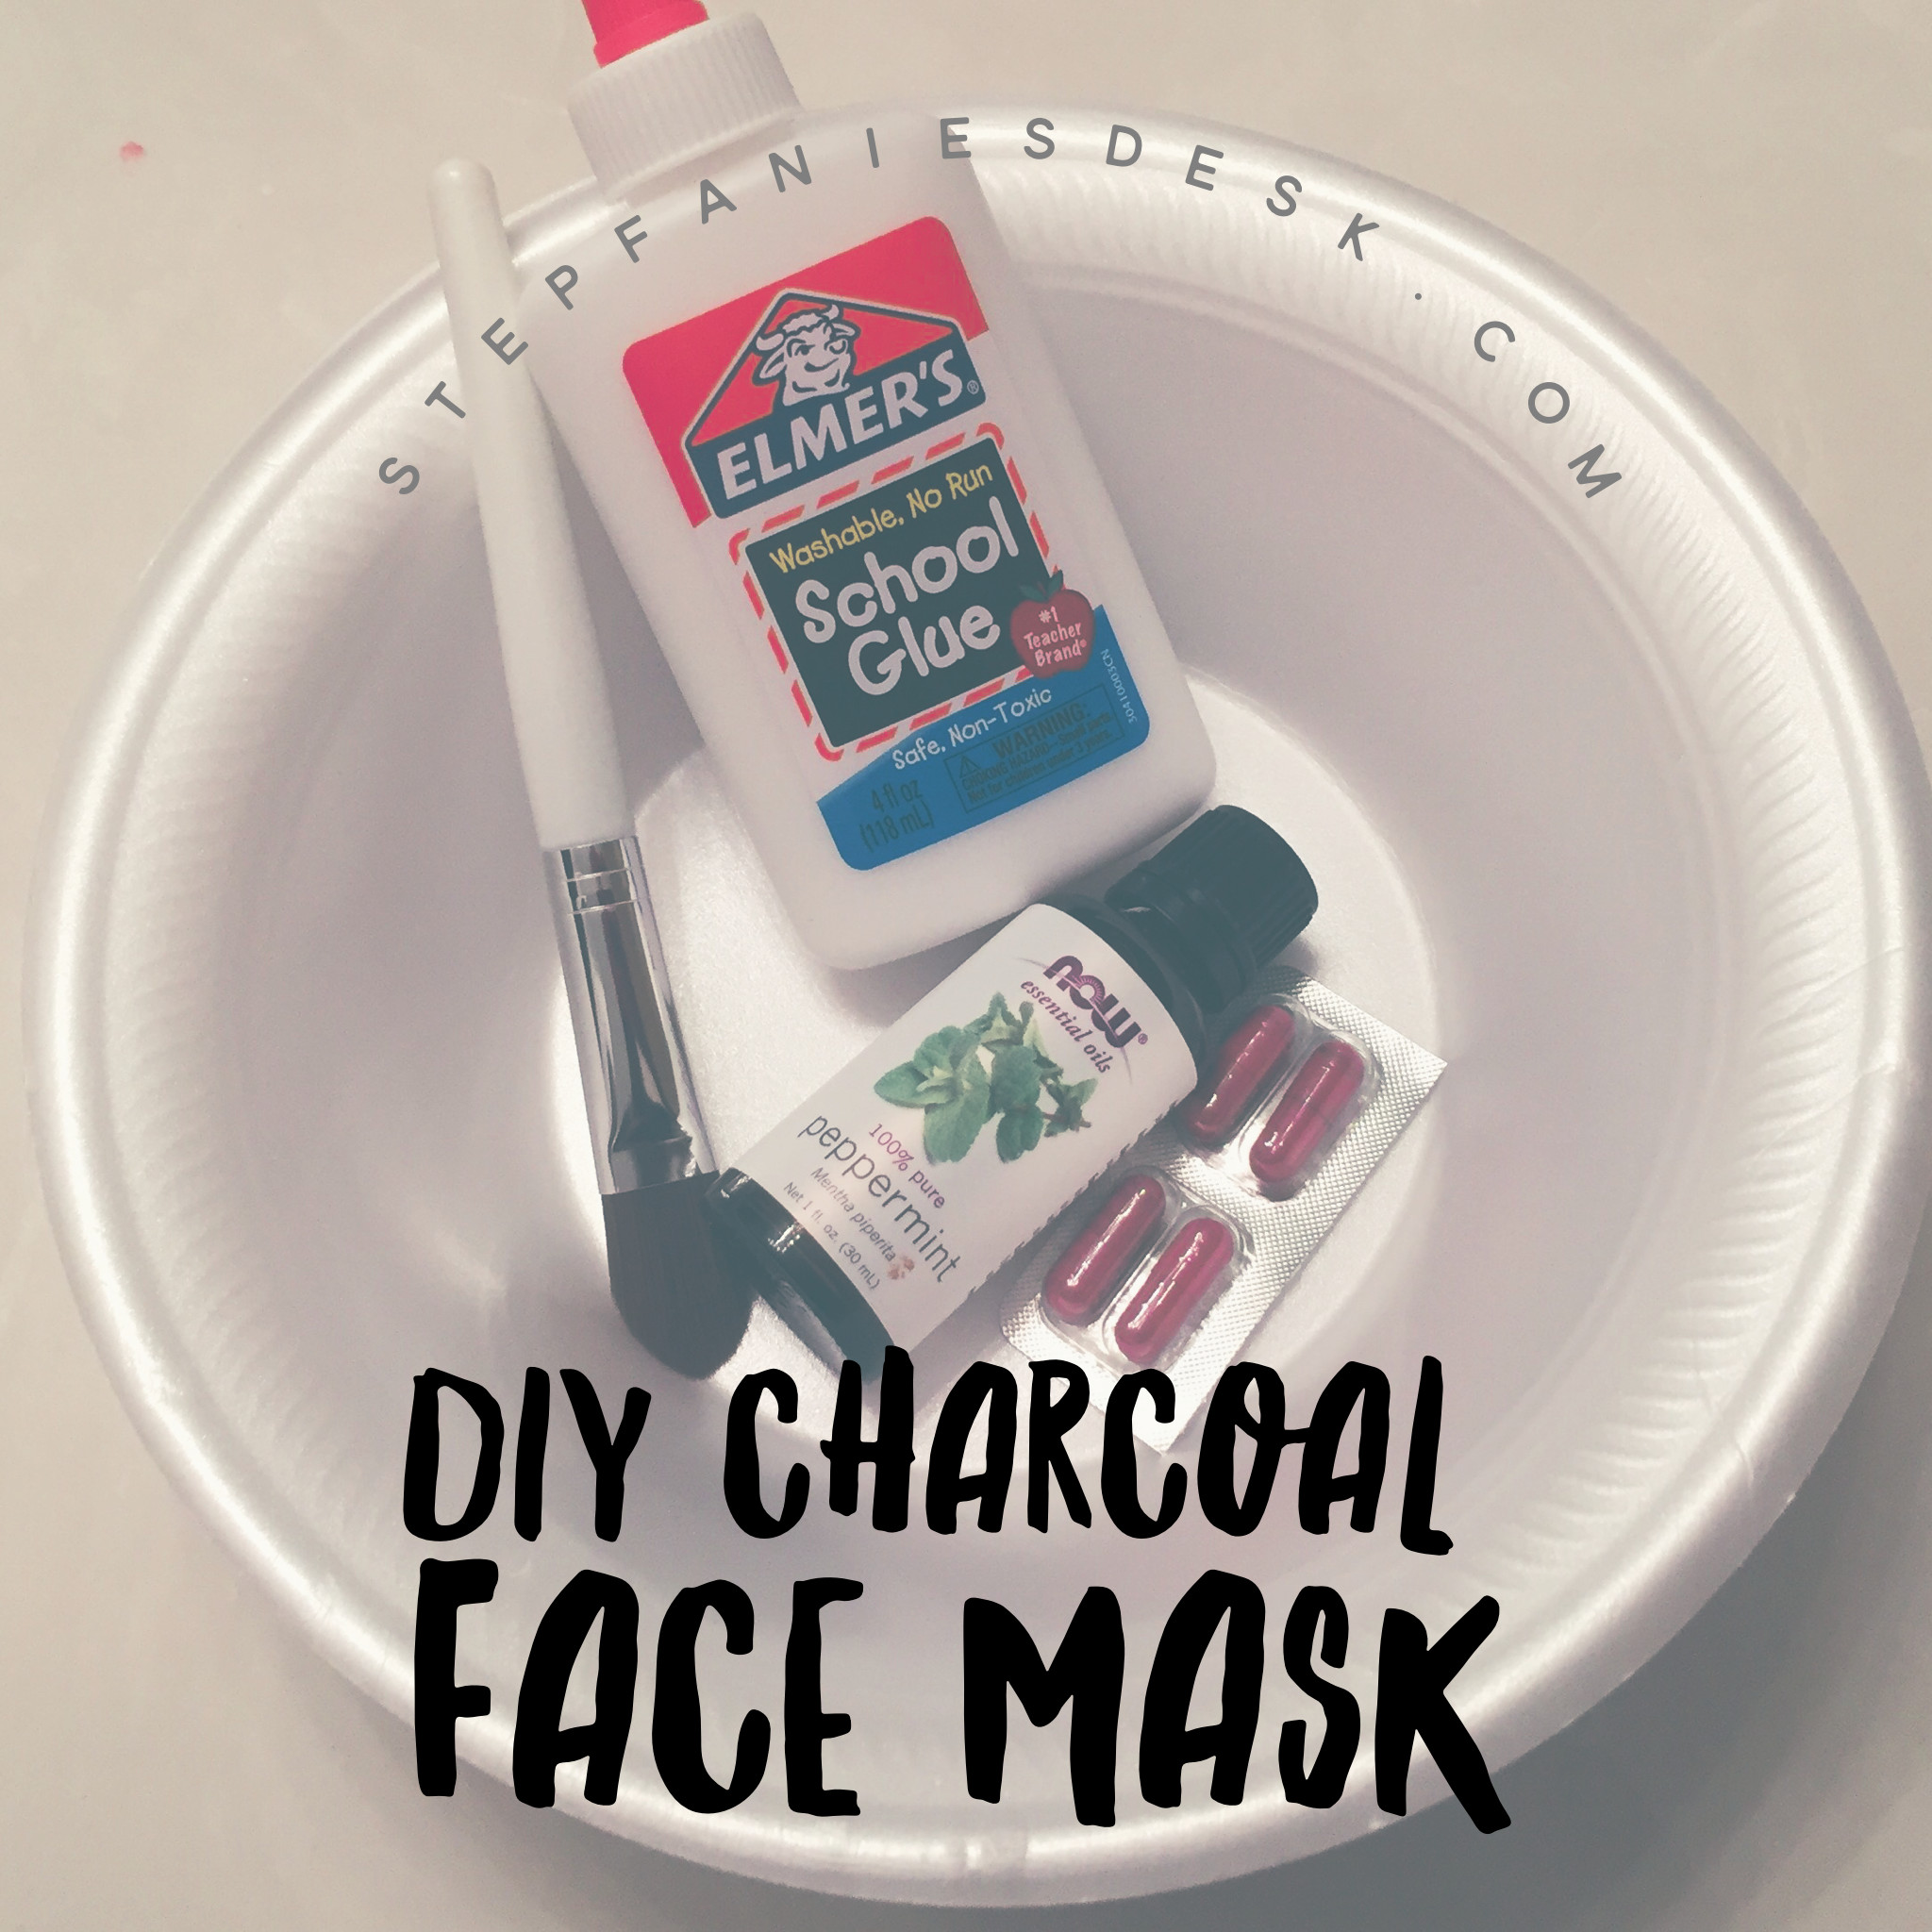 Charcoal Mask DIY
 DIY Charcoal Face Mask